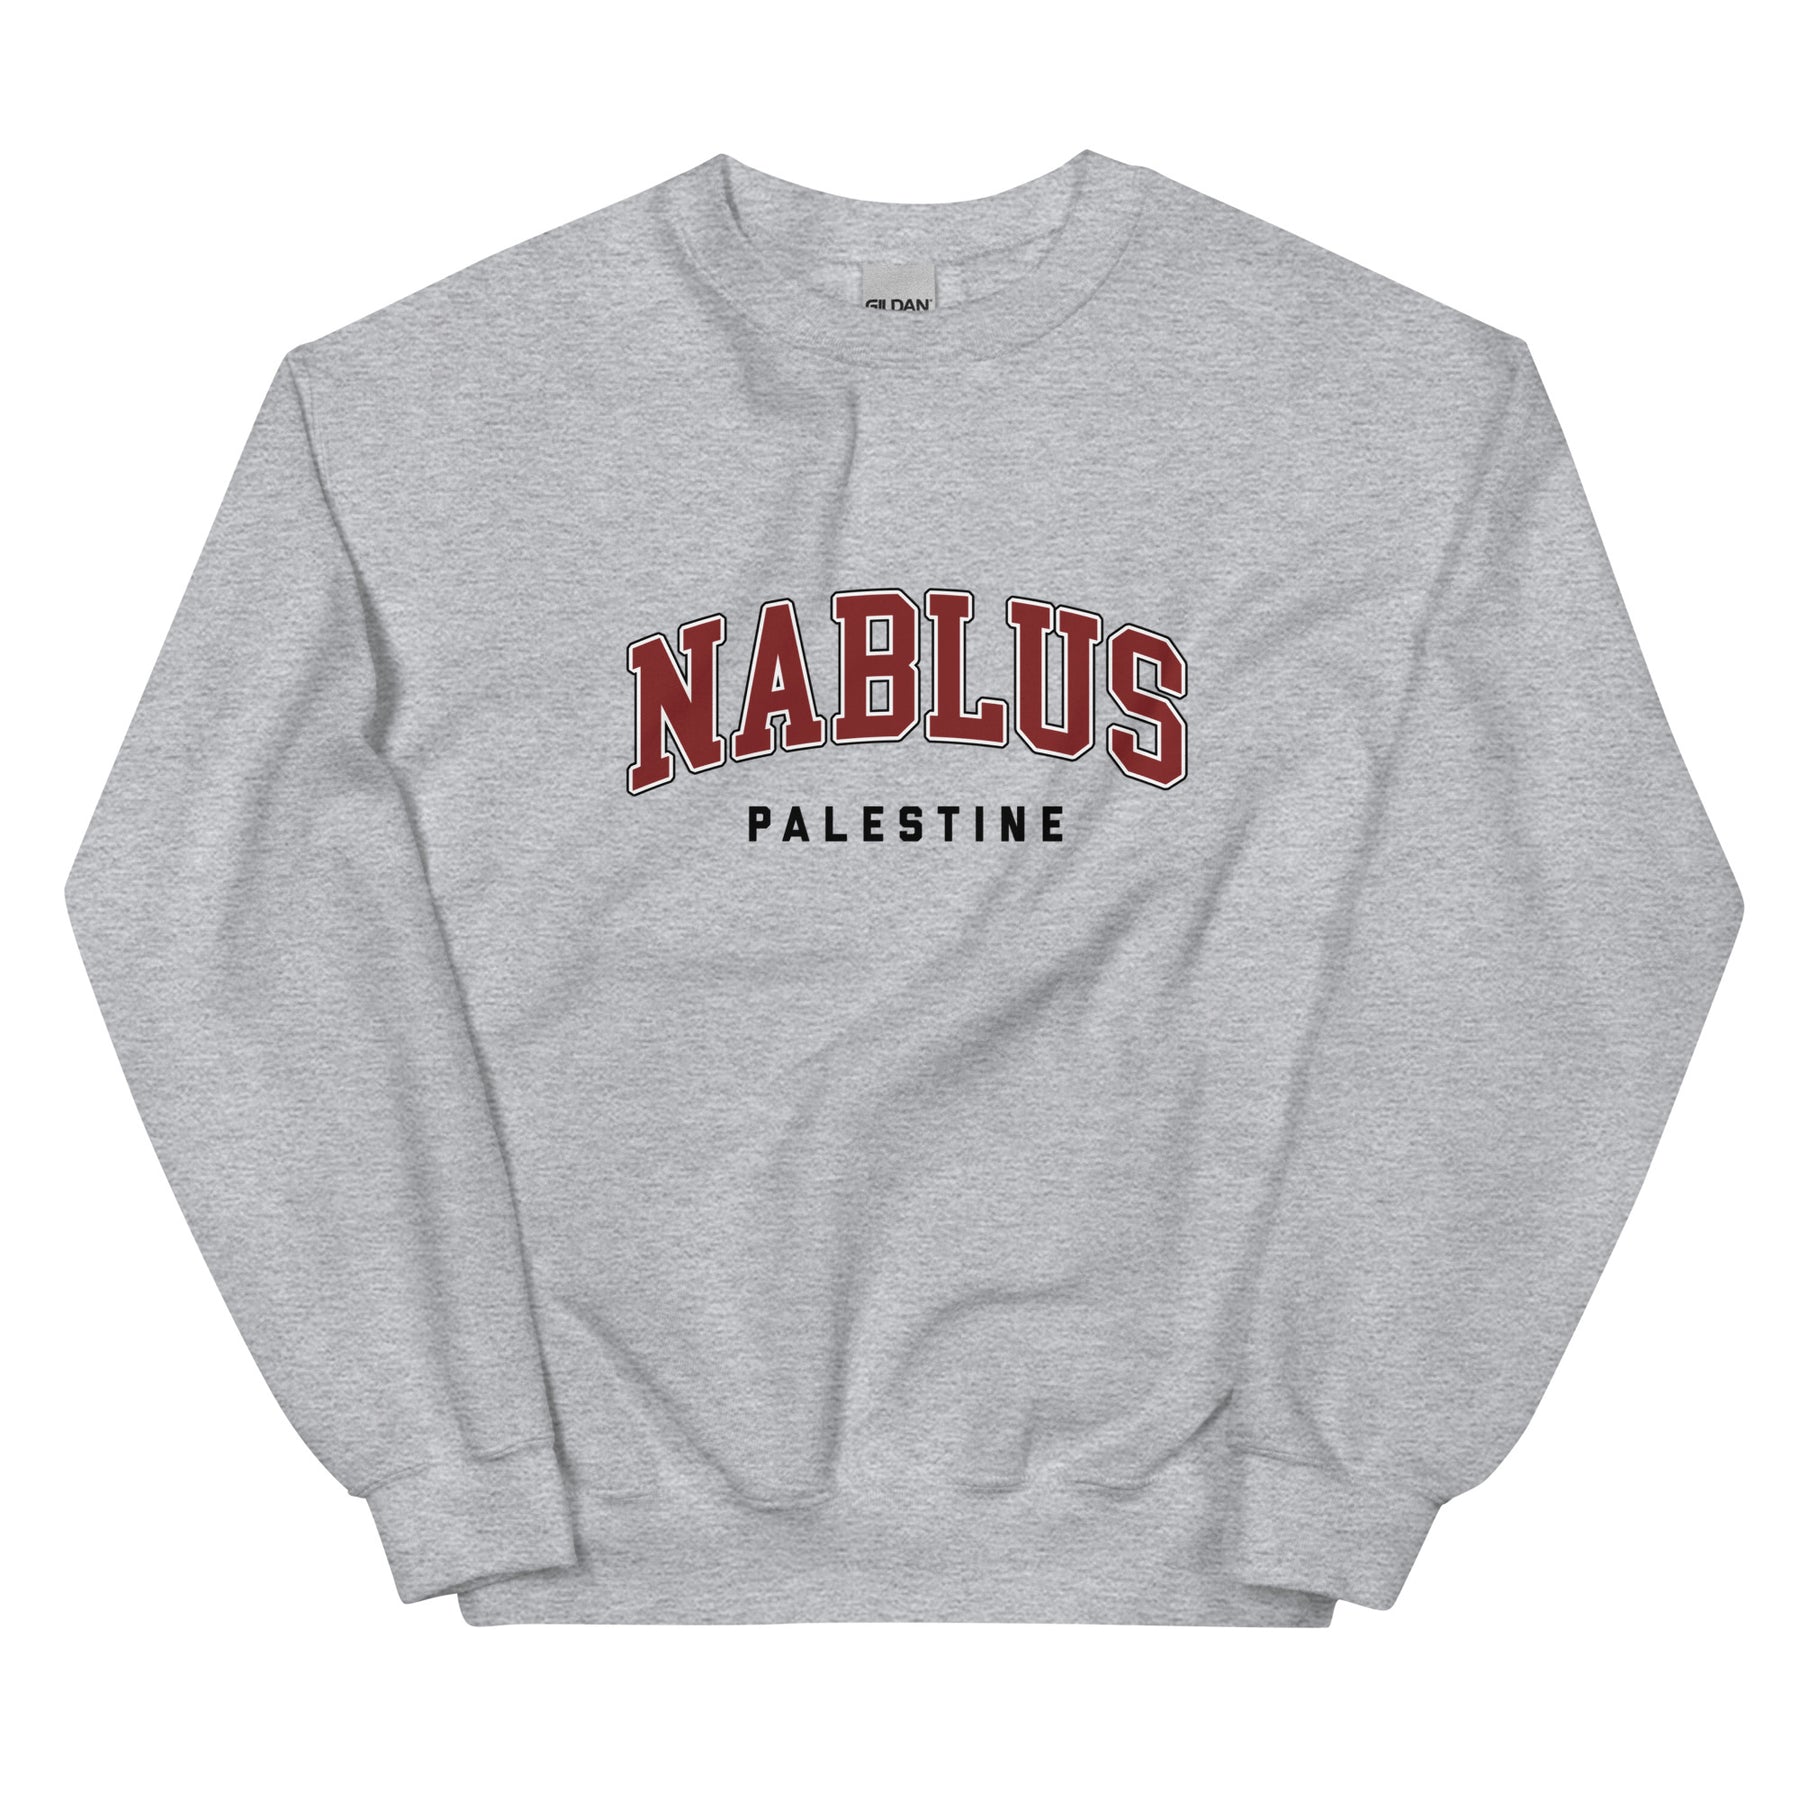 Nablus, Palestine - Sweatshirt